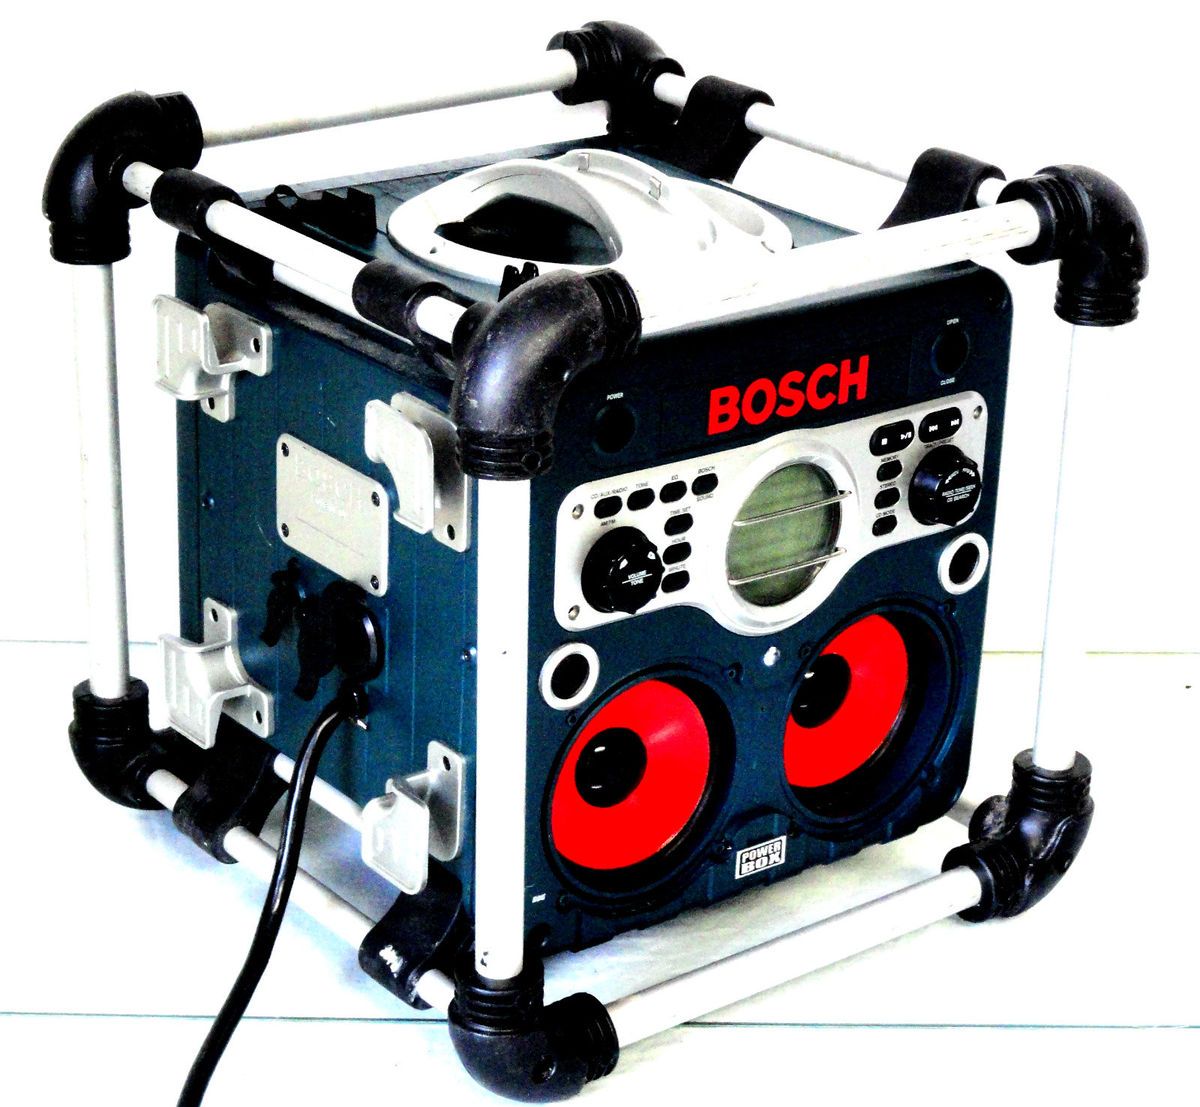 Bosch PB10 CD PowerBox Job Site Radio & CD Player Stereo Parts Not